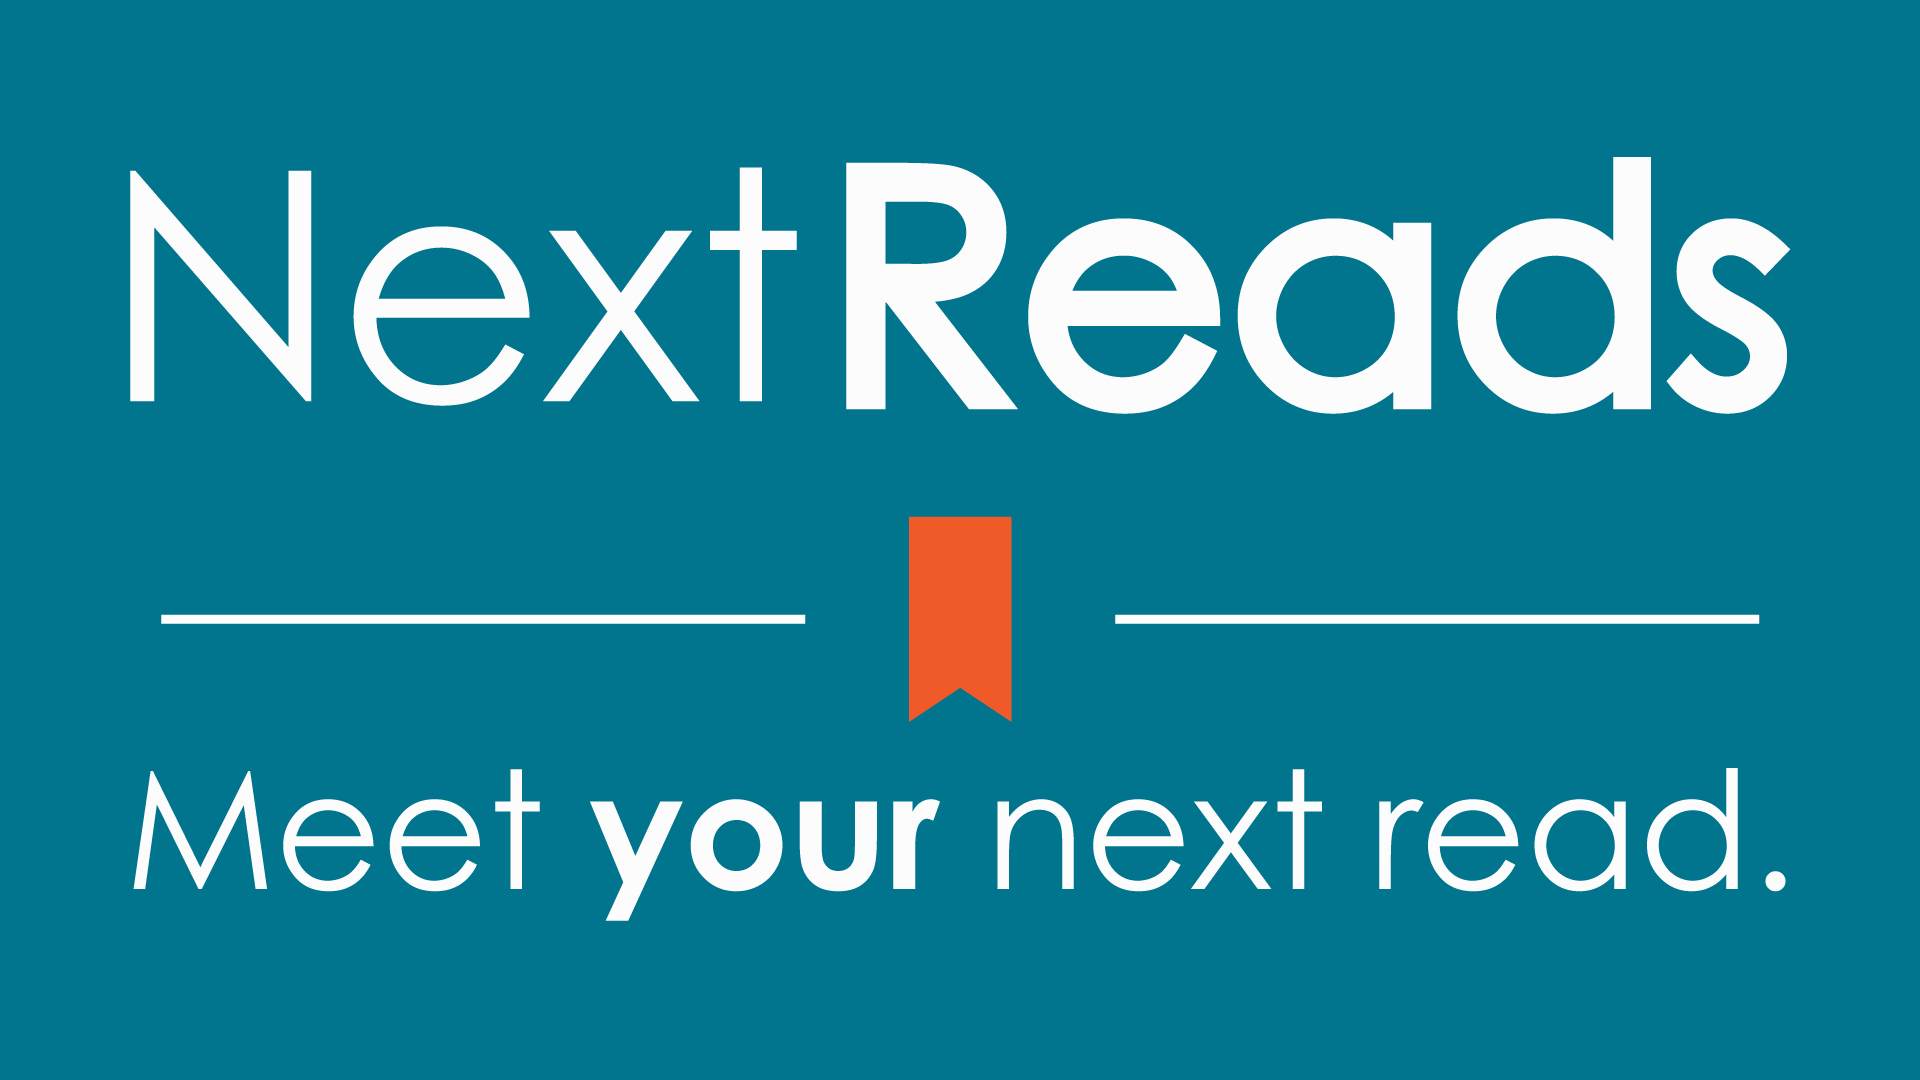 NextReads. Meet your next read.